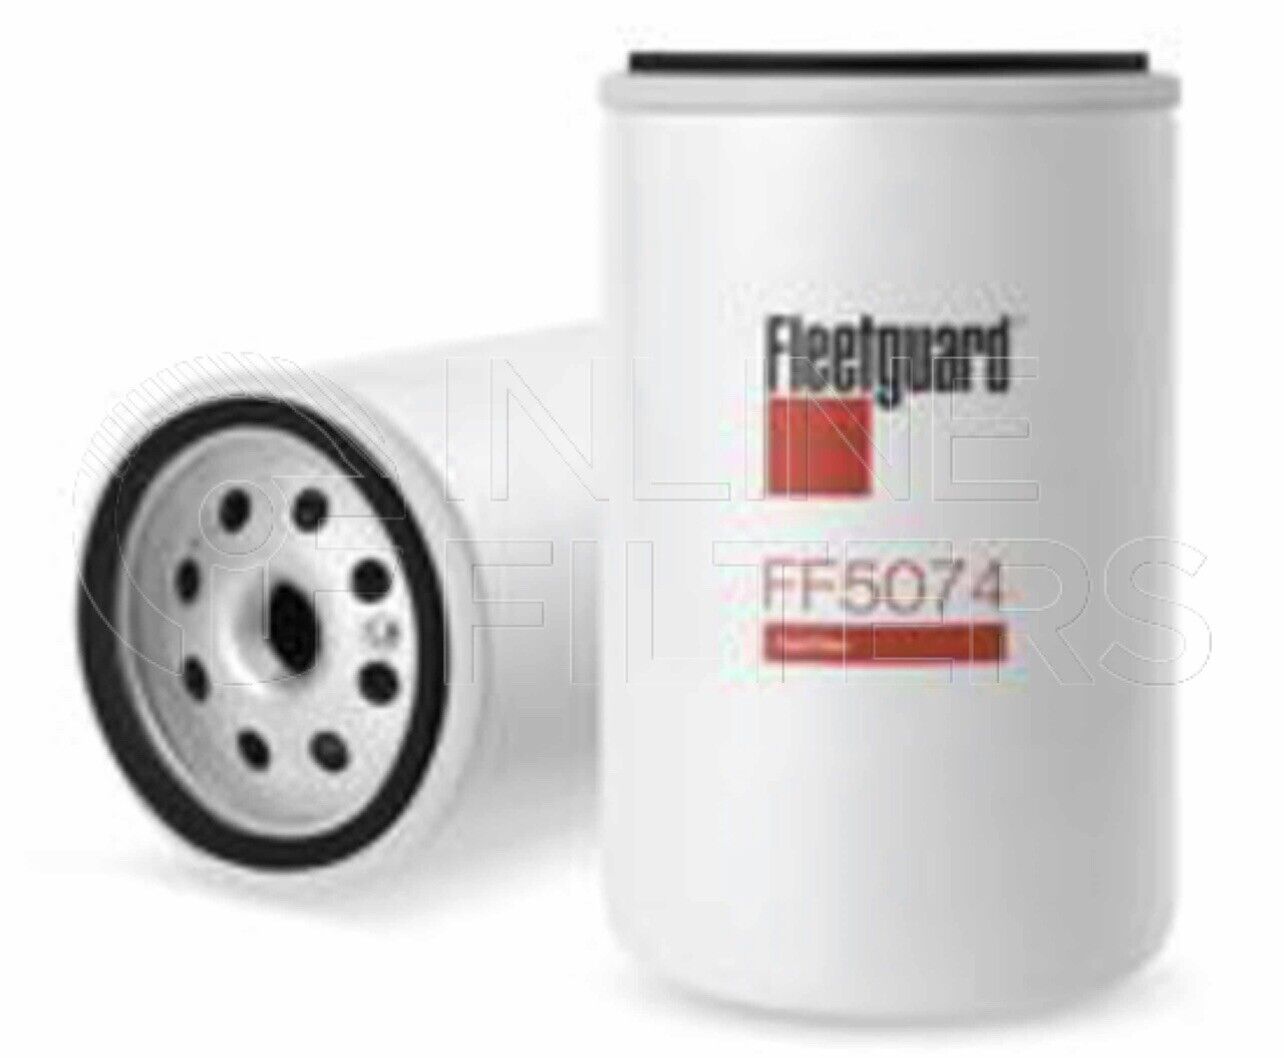 Fuel Filter Replacement Fleetguard FF5074 Marine Water Separator Volvo Penta MD7